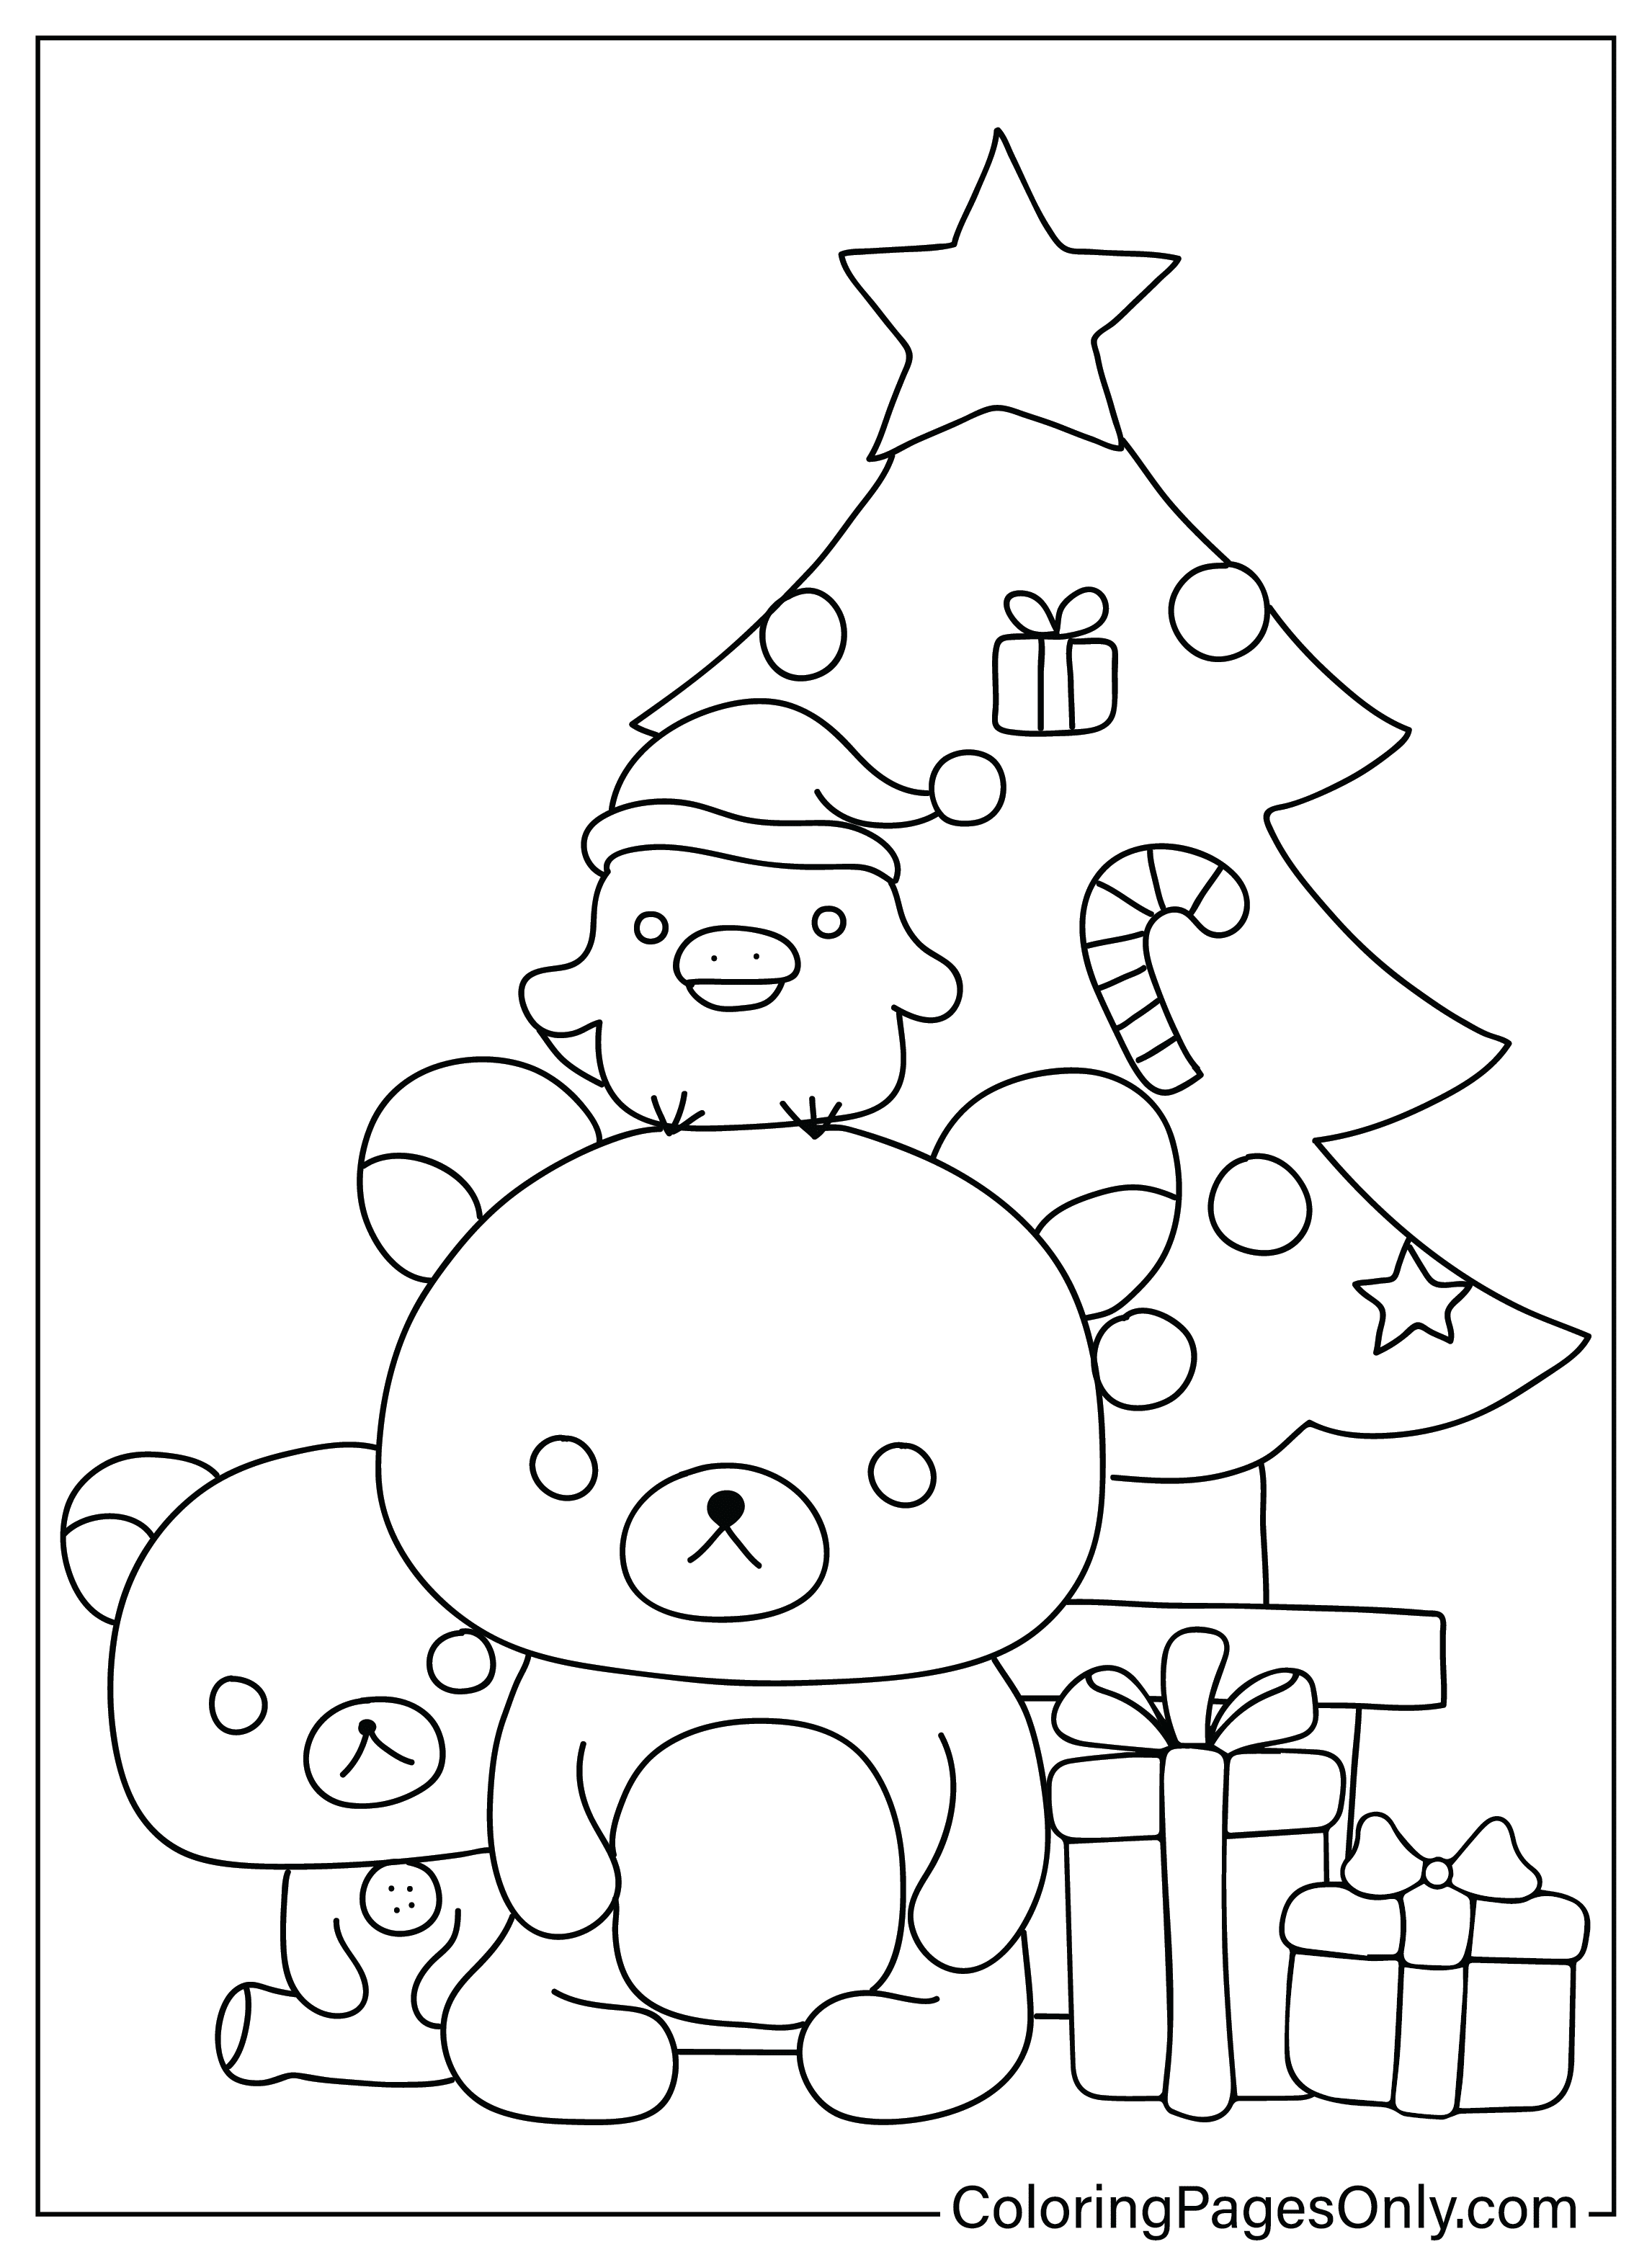 Página para colorir de desenho animado de Natal grátis em desenho animado de Natal